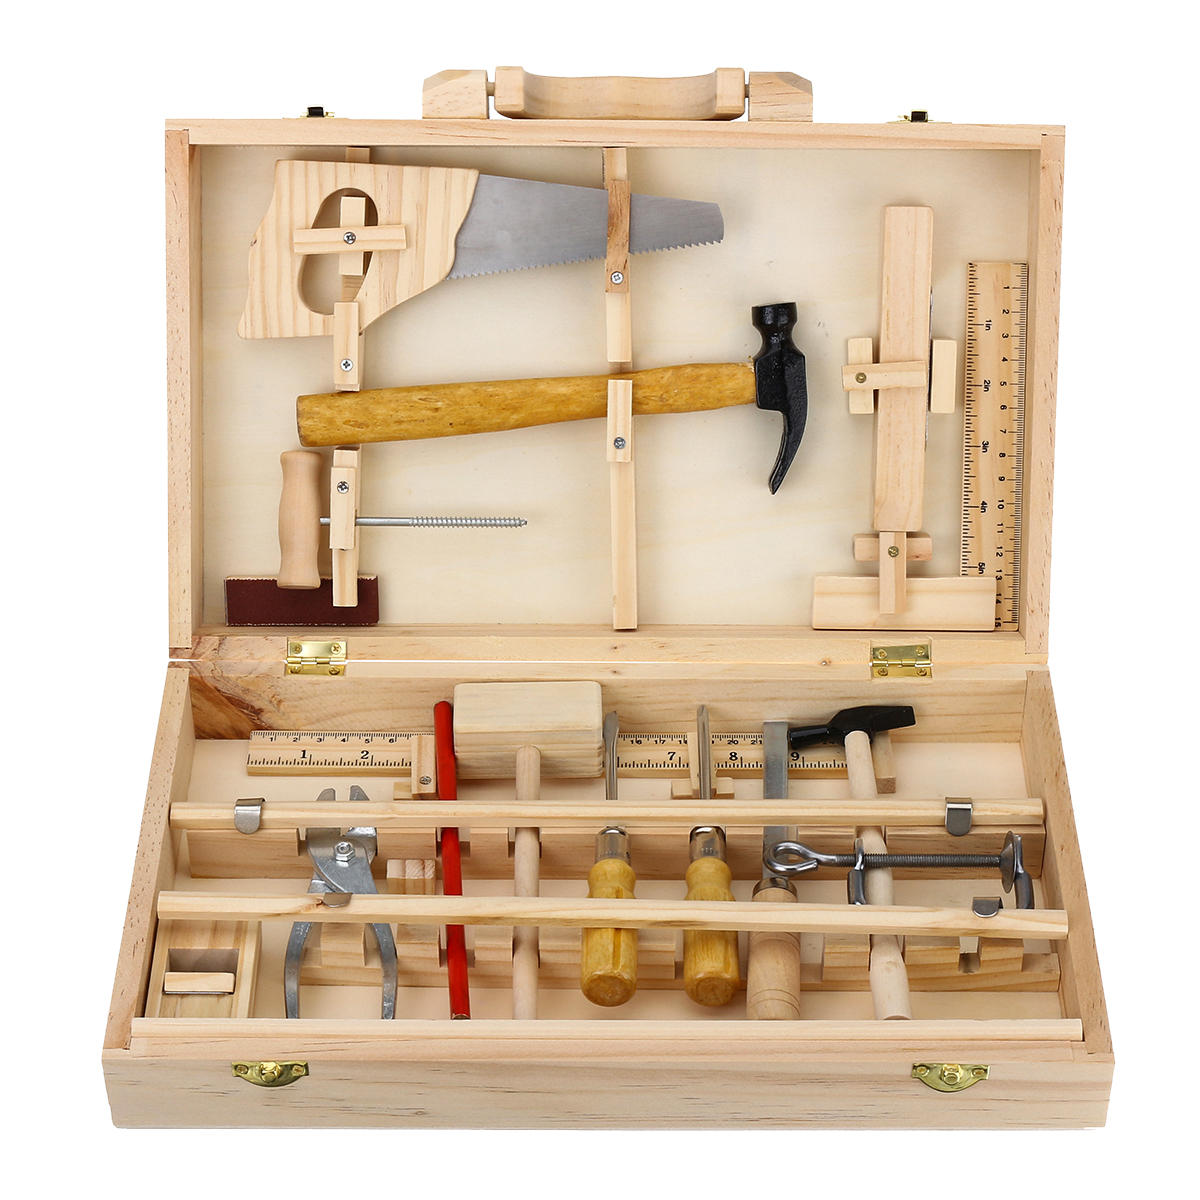 wooden kids tool set